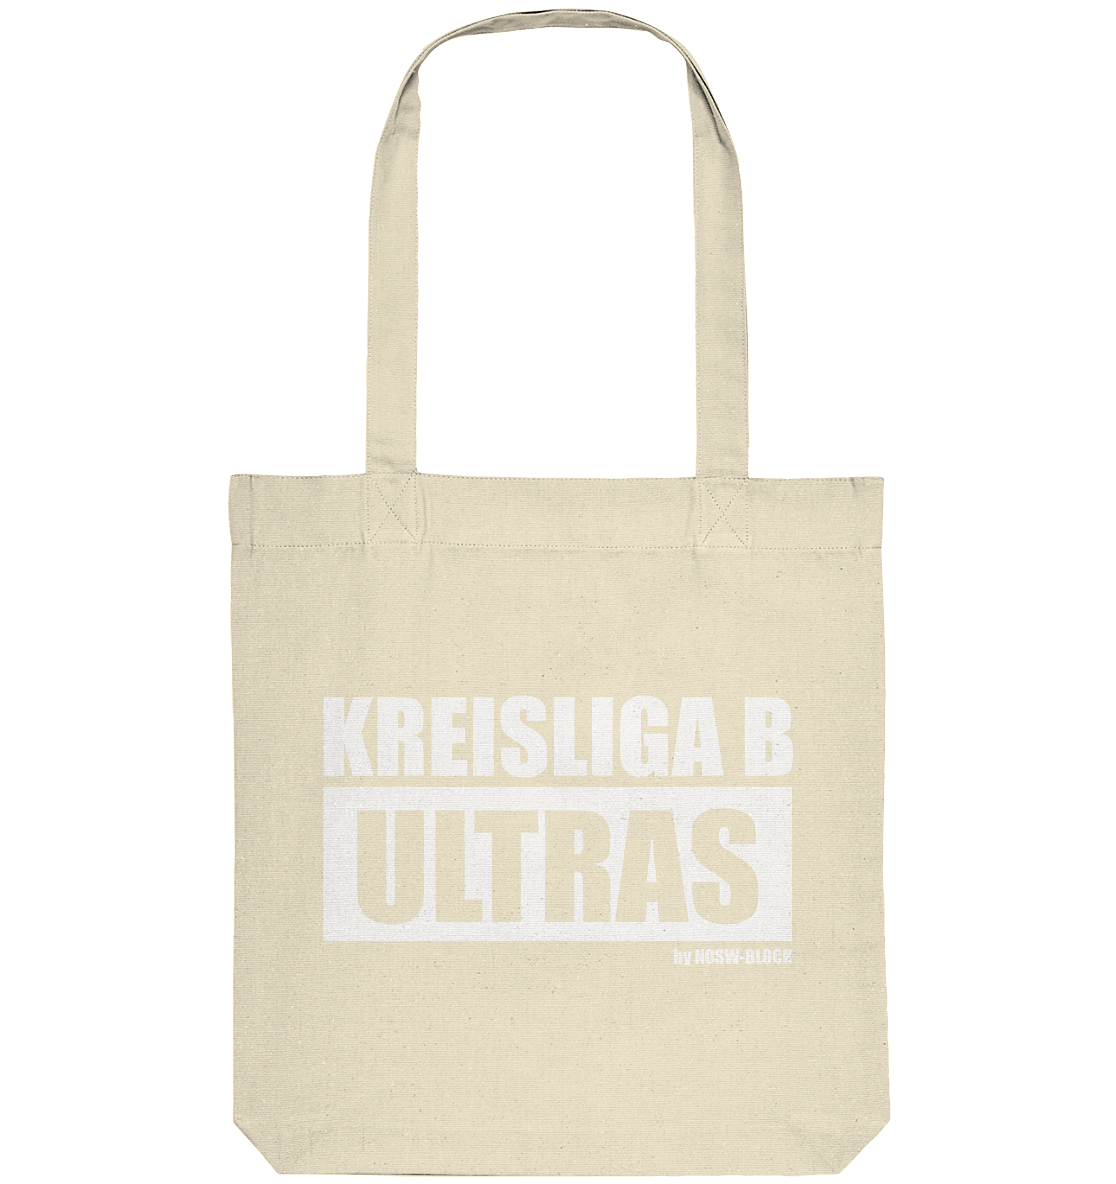 N.O.S.W. BLOCK Ultras Tote-Bag "KREISLIGA B ULTRAS" Organic Baumwolltasche natural